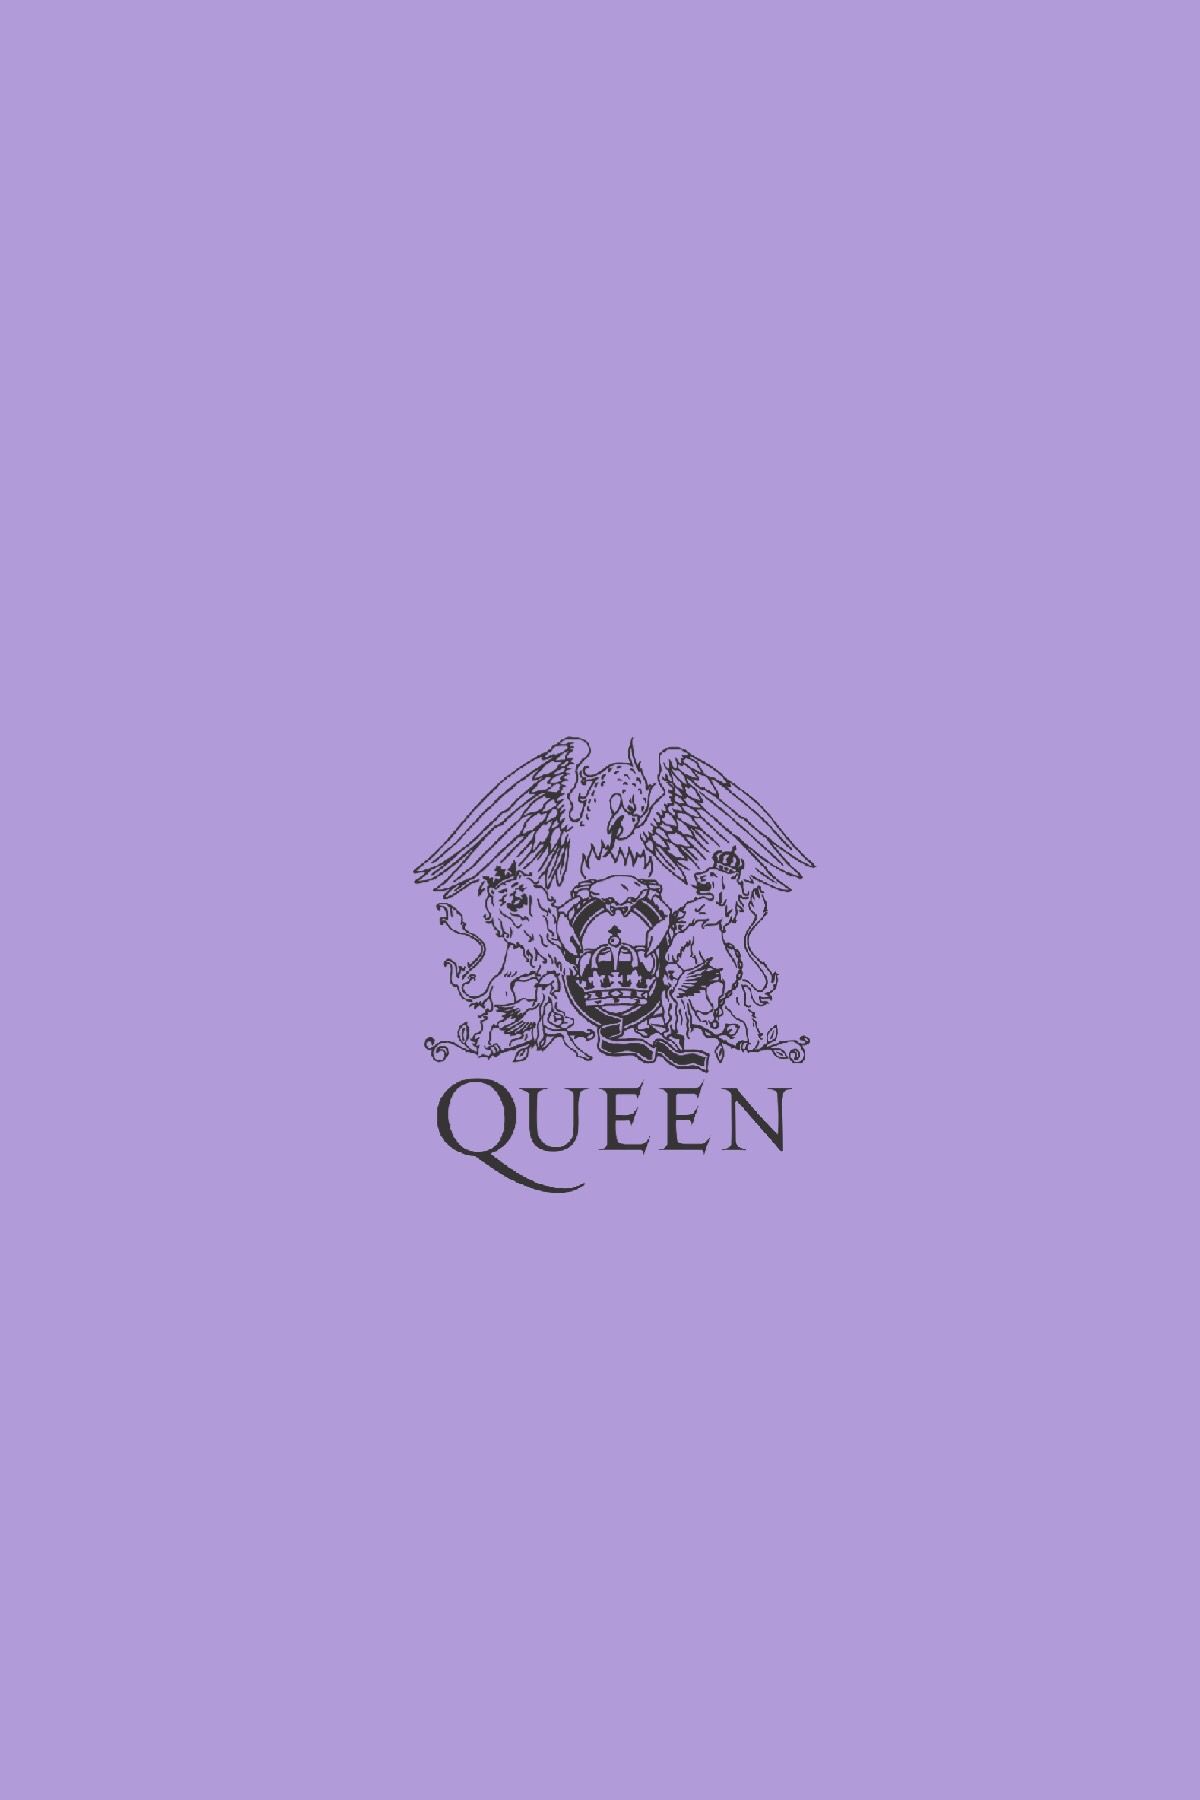 Queen Greatest Hits - HD Wallpaper 